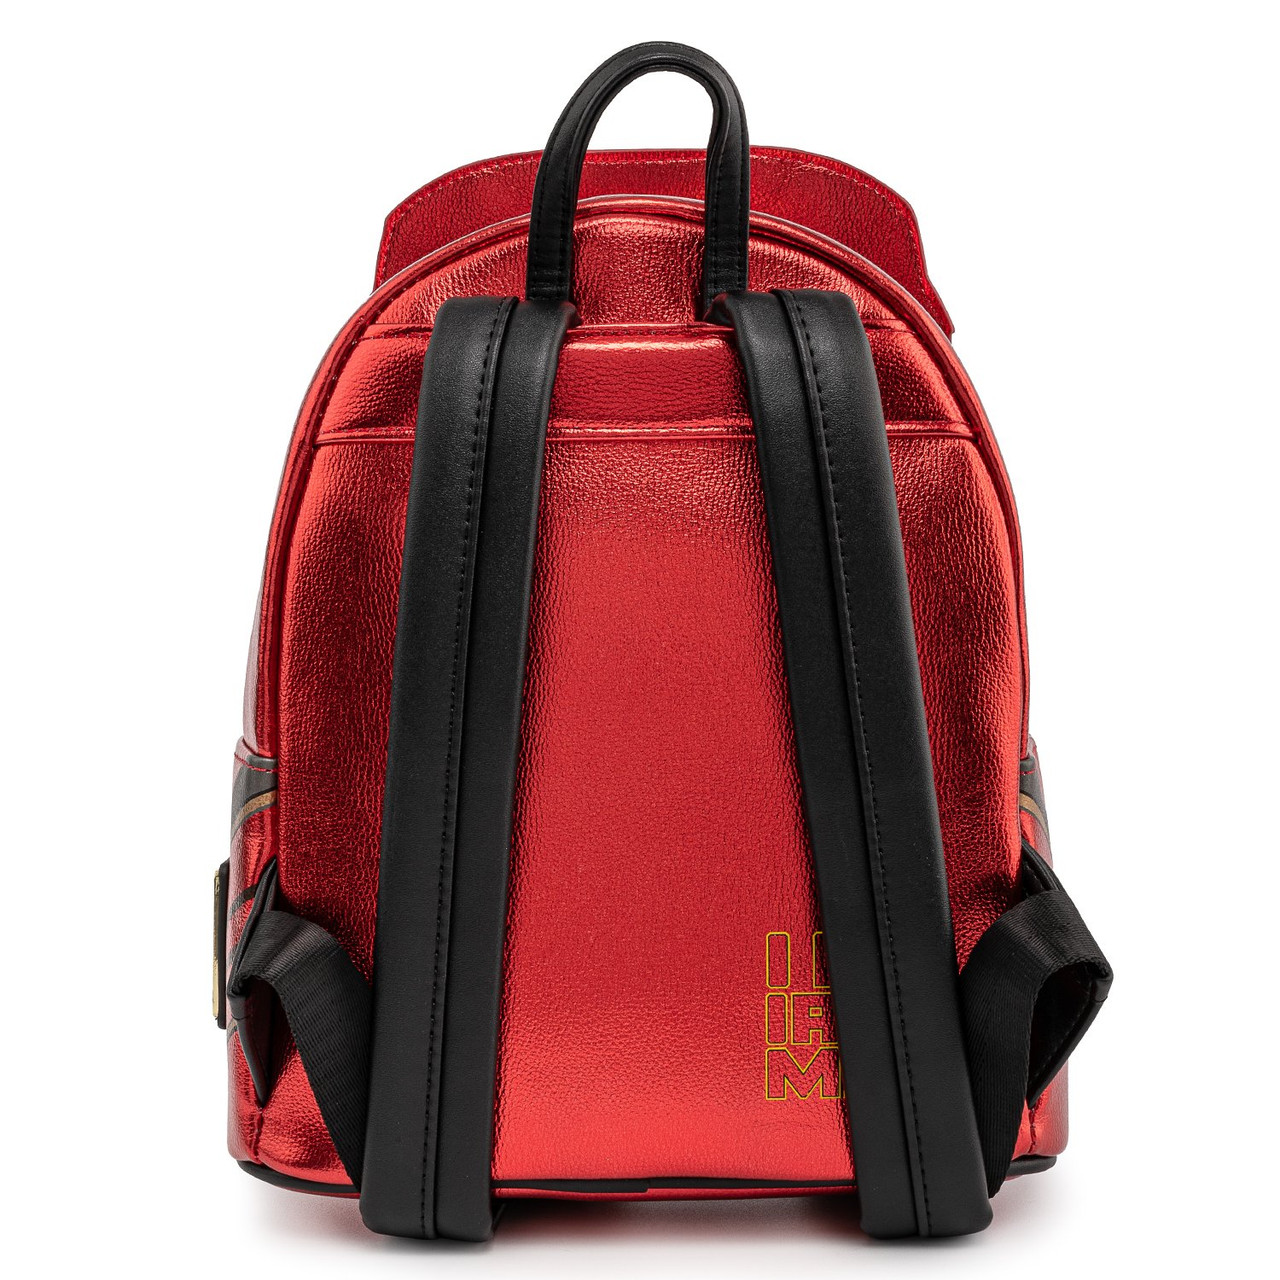 Iron Man 15th Anniversary Cosplay Mini Backpack